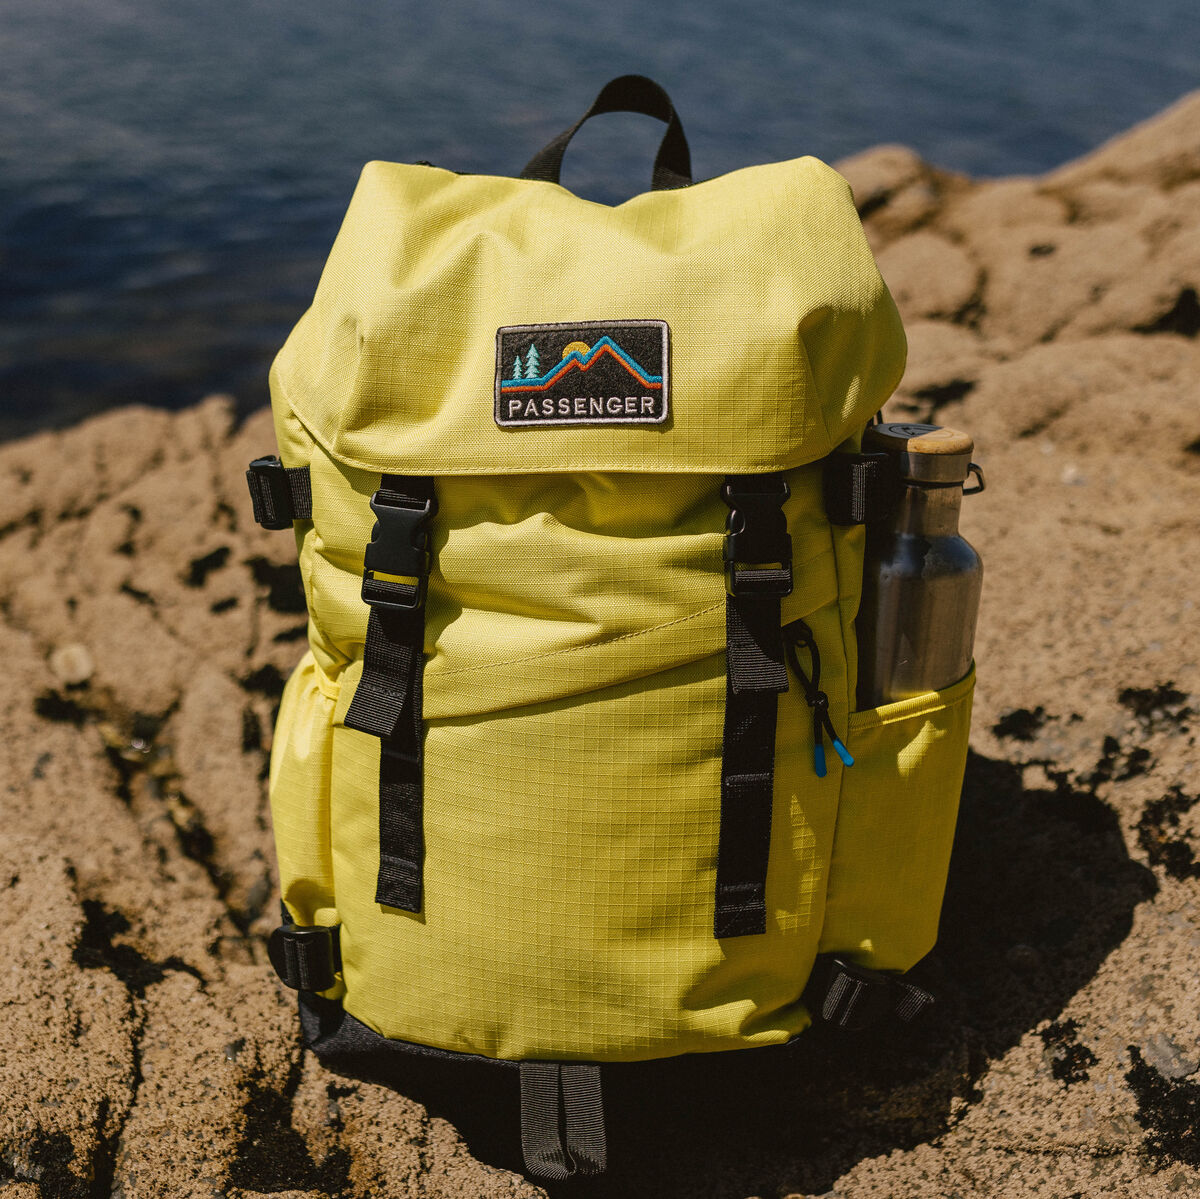 Boondocker 26L Backpack - Sheen Yellow